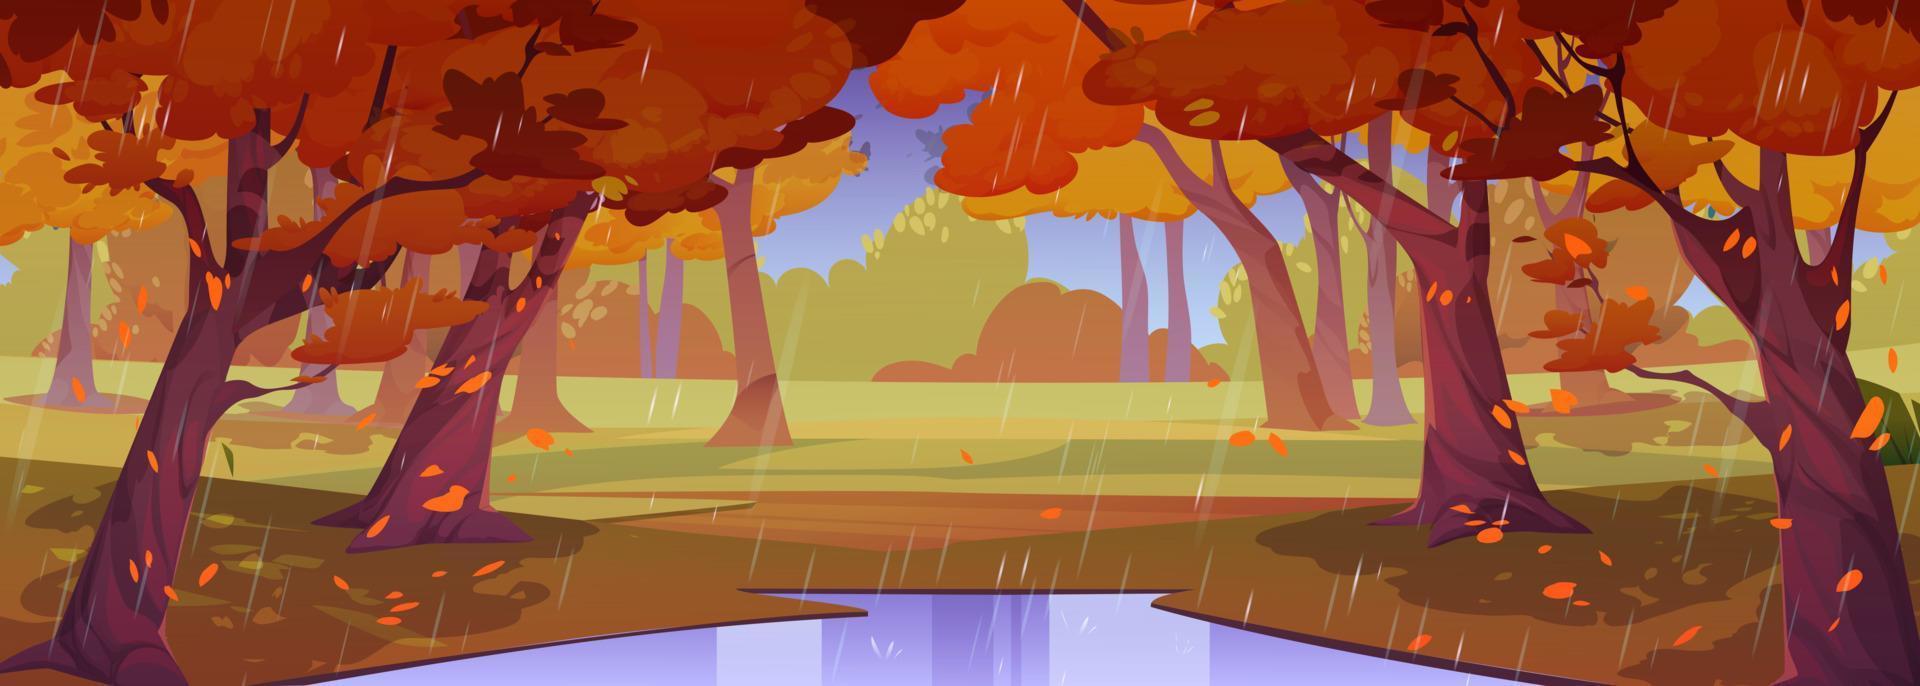 lluvia en otoño bosque, naturaleza paisaje, otoño parque vector